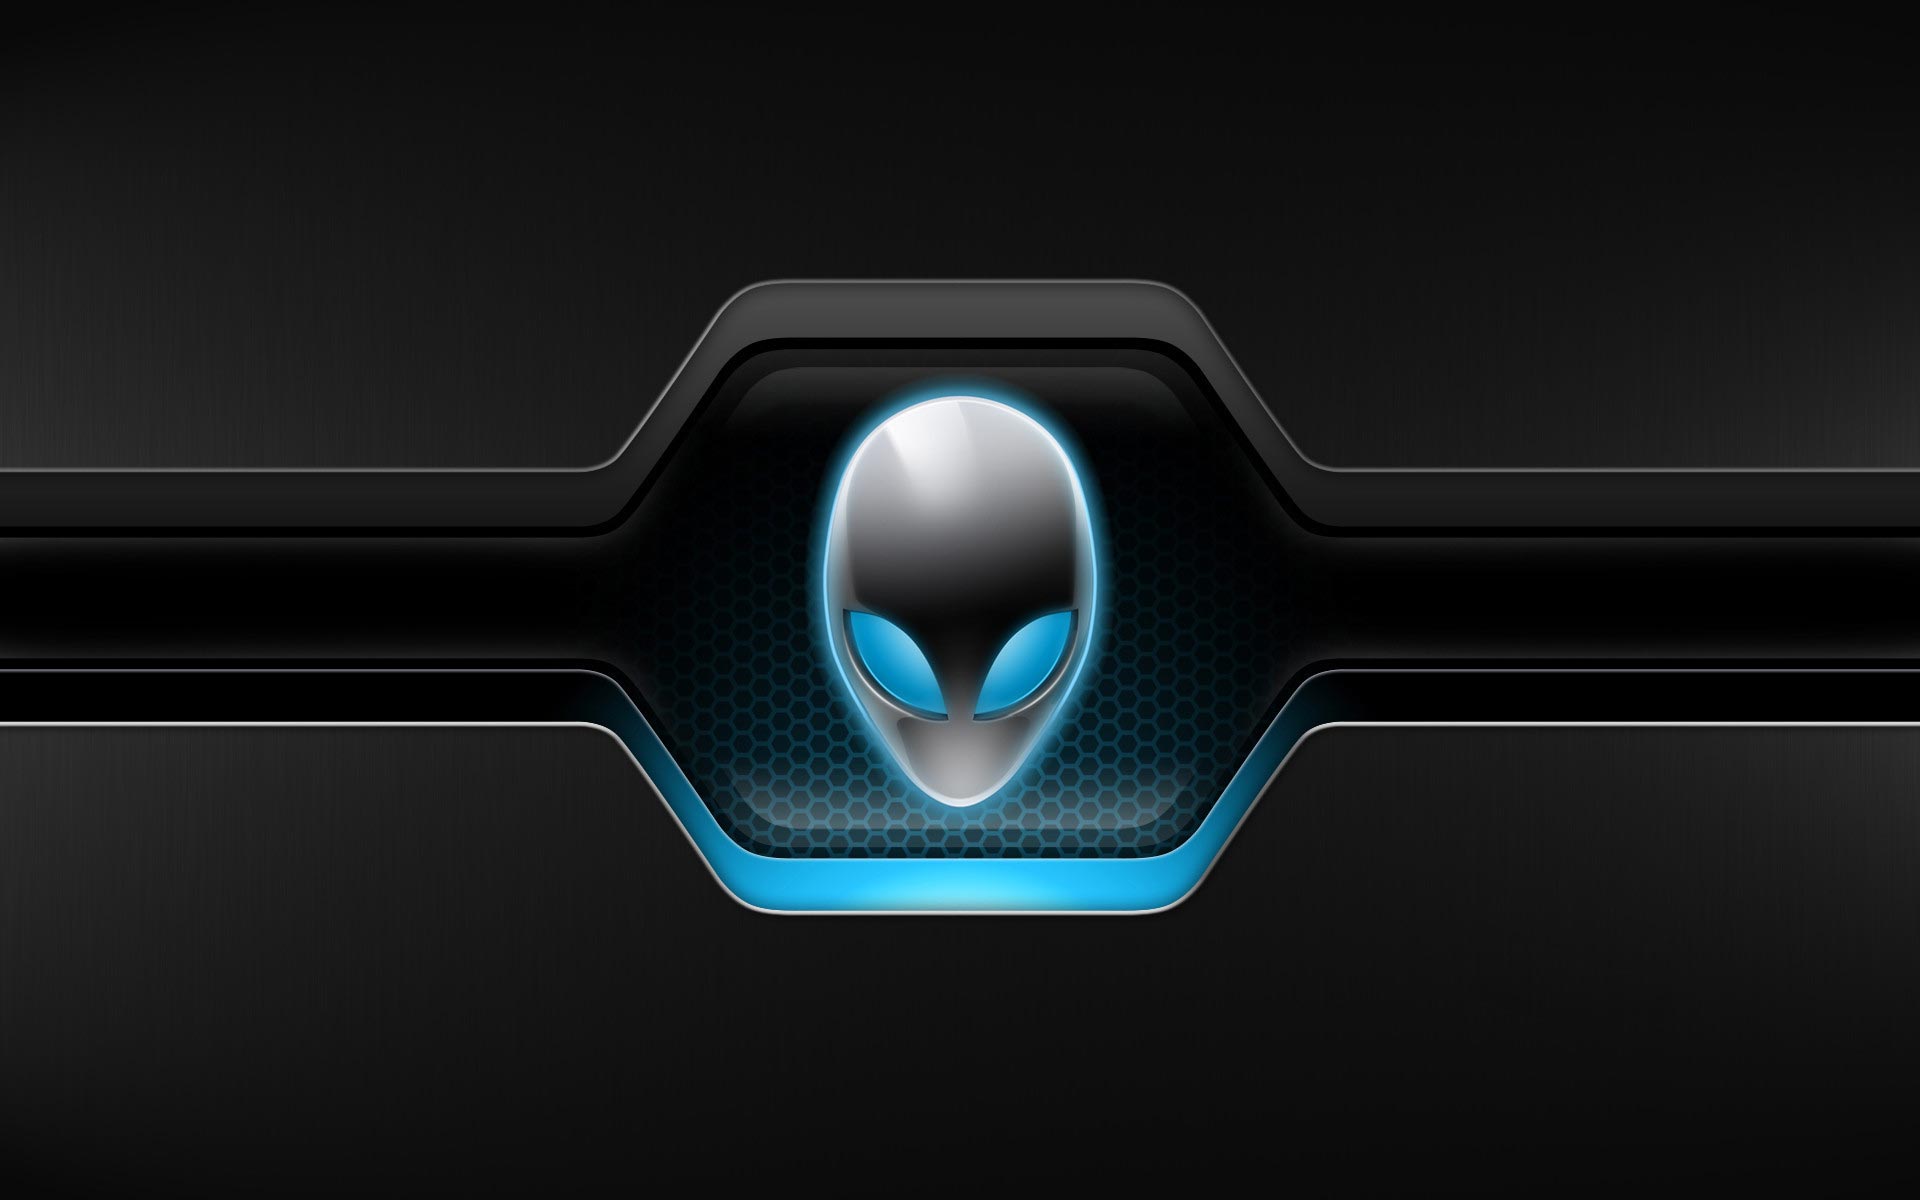 Alienware Modern HD Wallpaper. TanukinoSippo